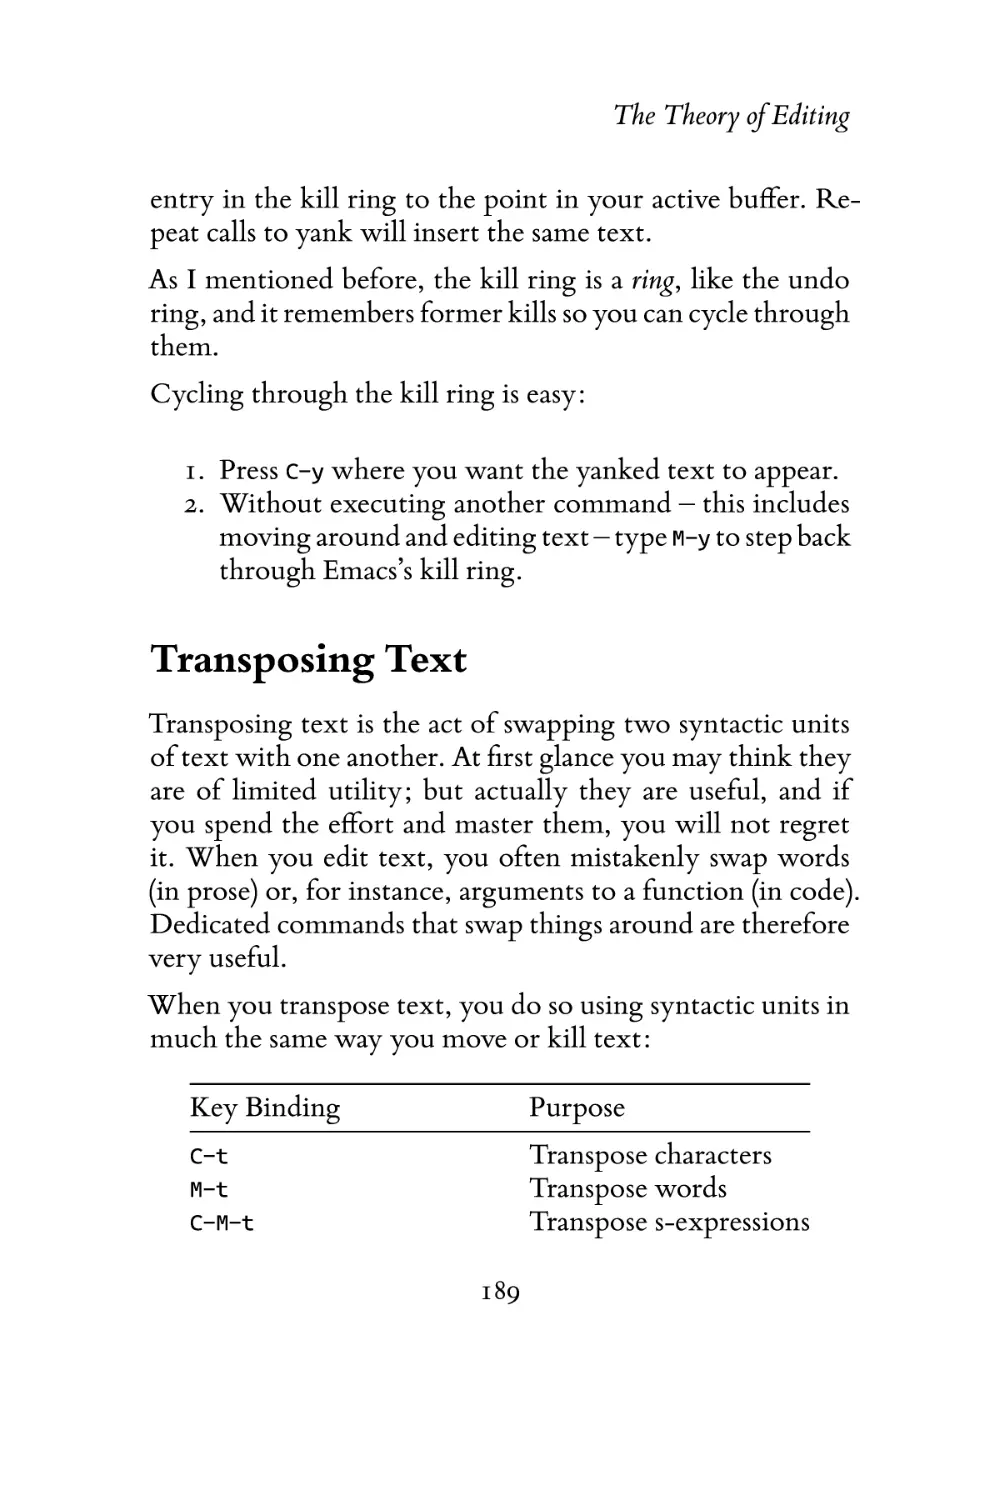 Transposing Text